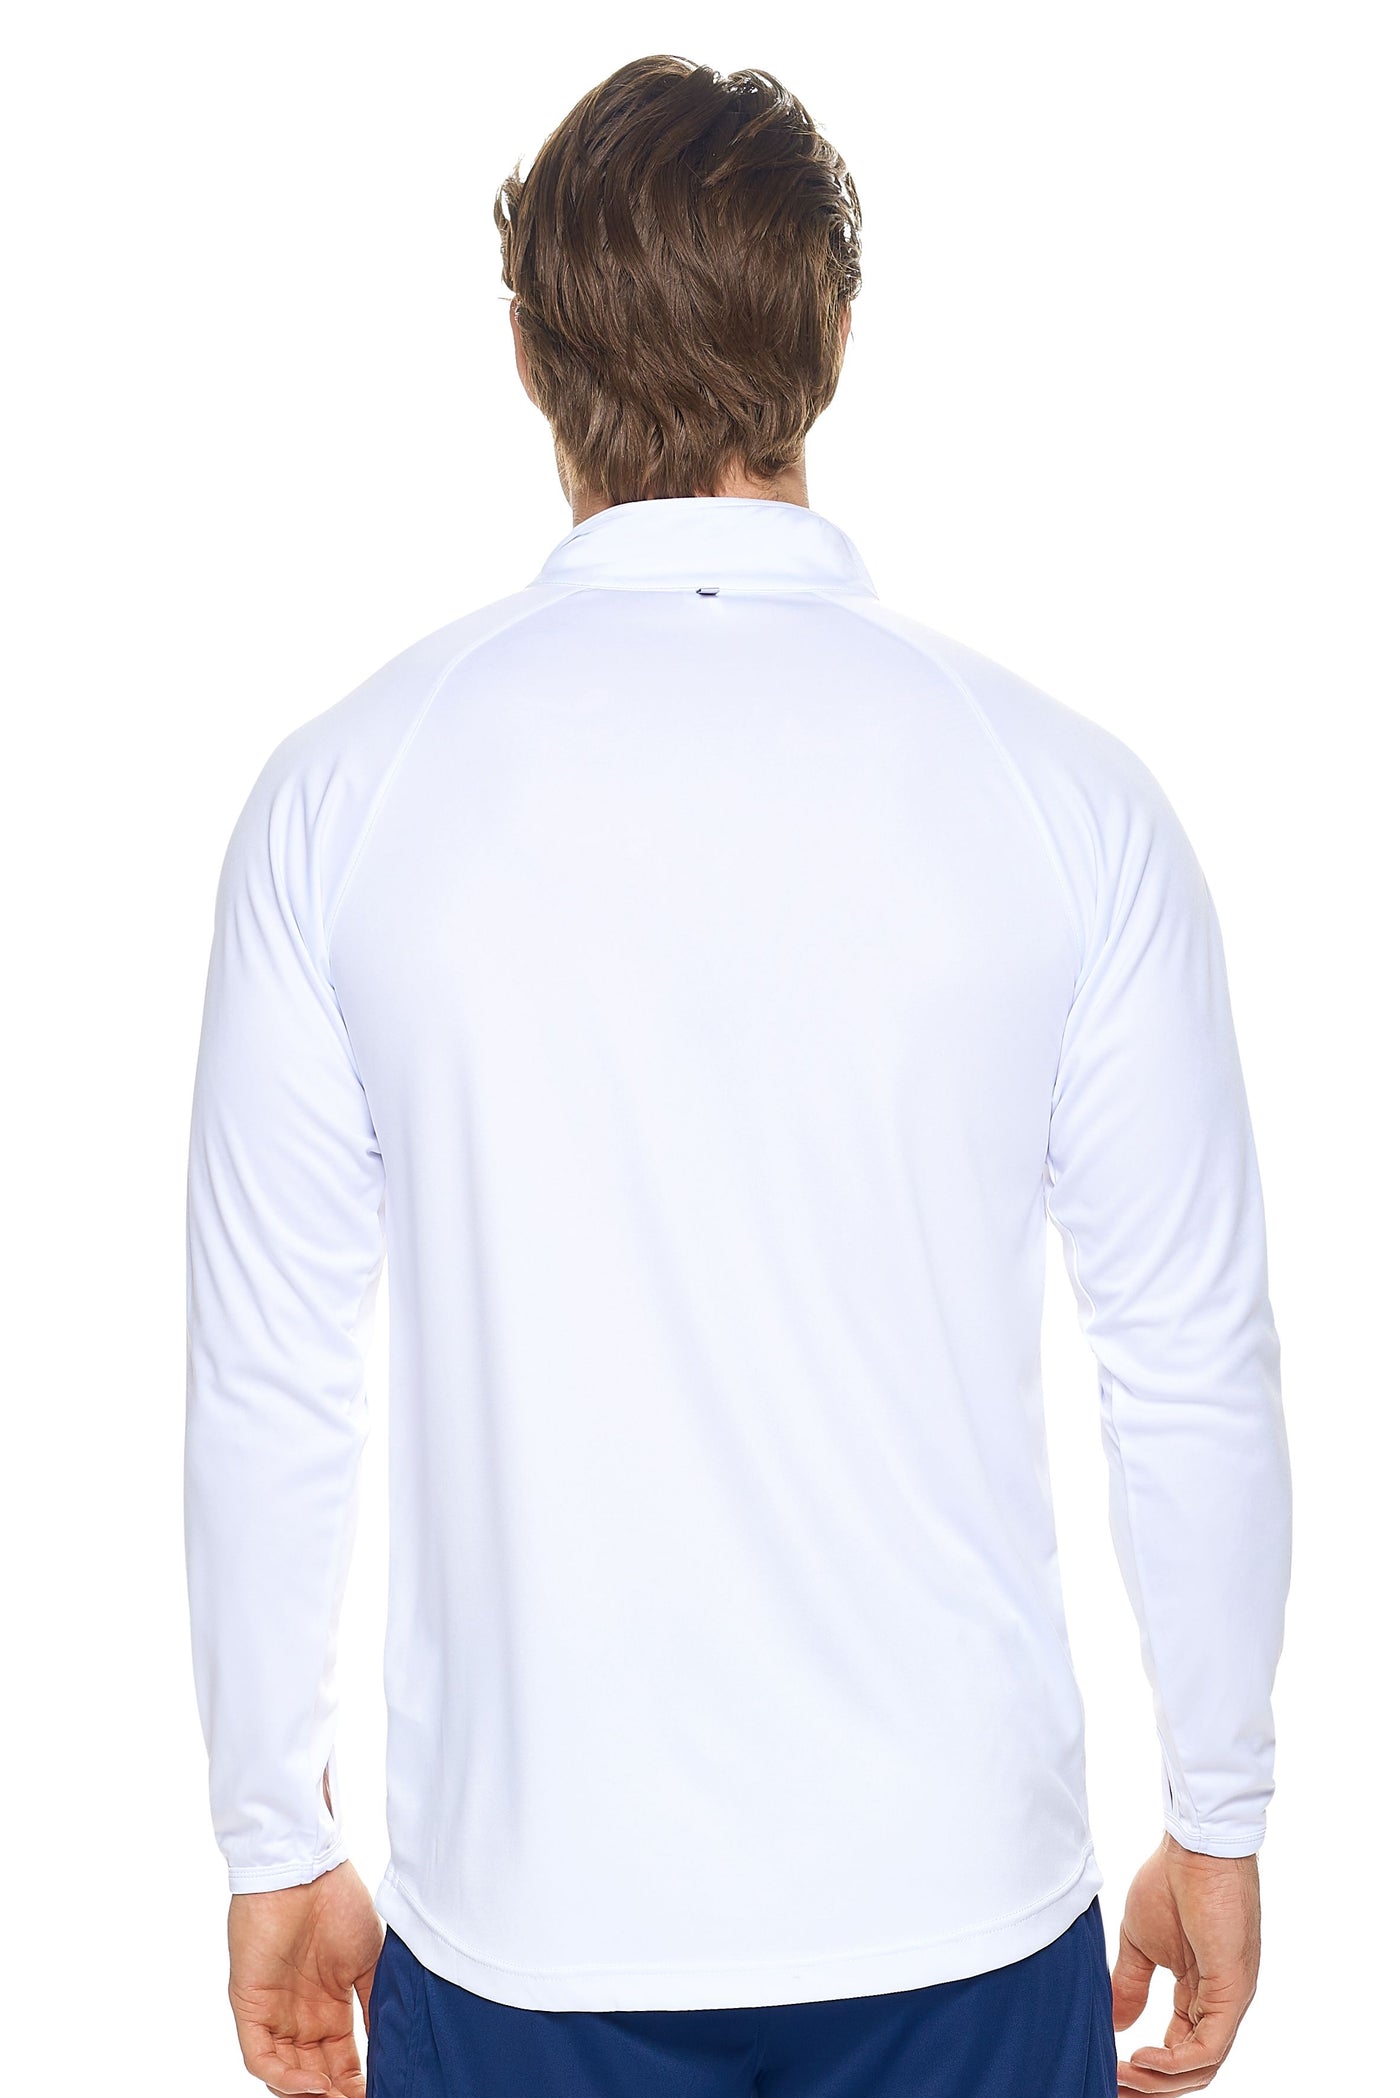 Expert Brand Men's pk MaX™ Half-Zip Run Away Top in White Image 3